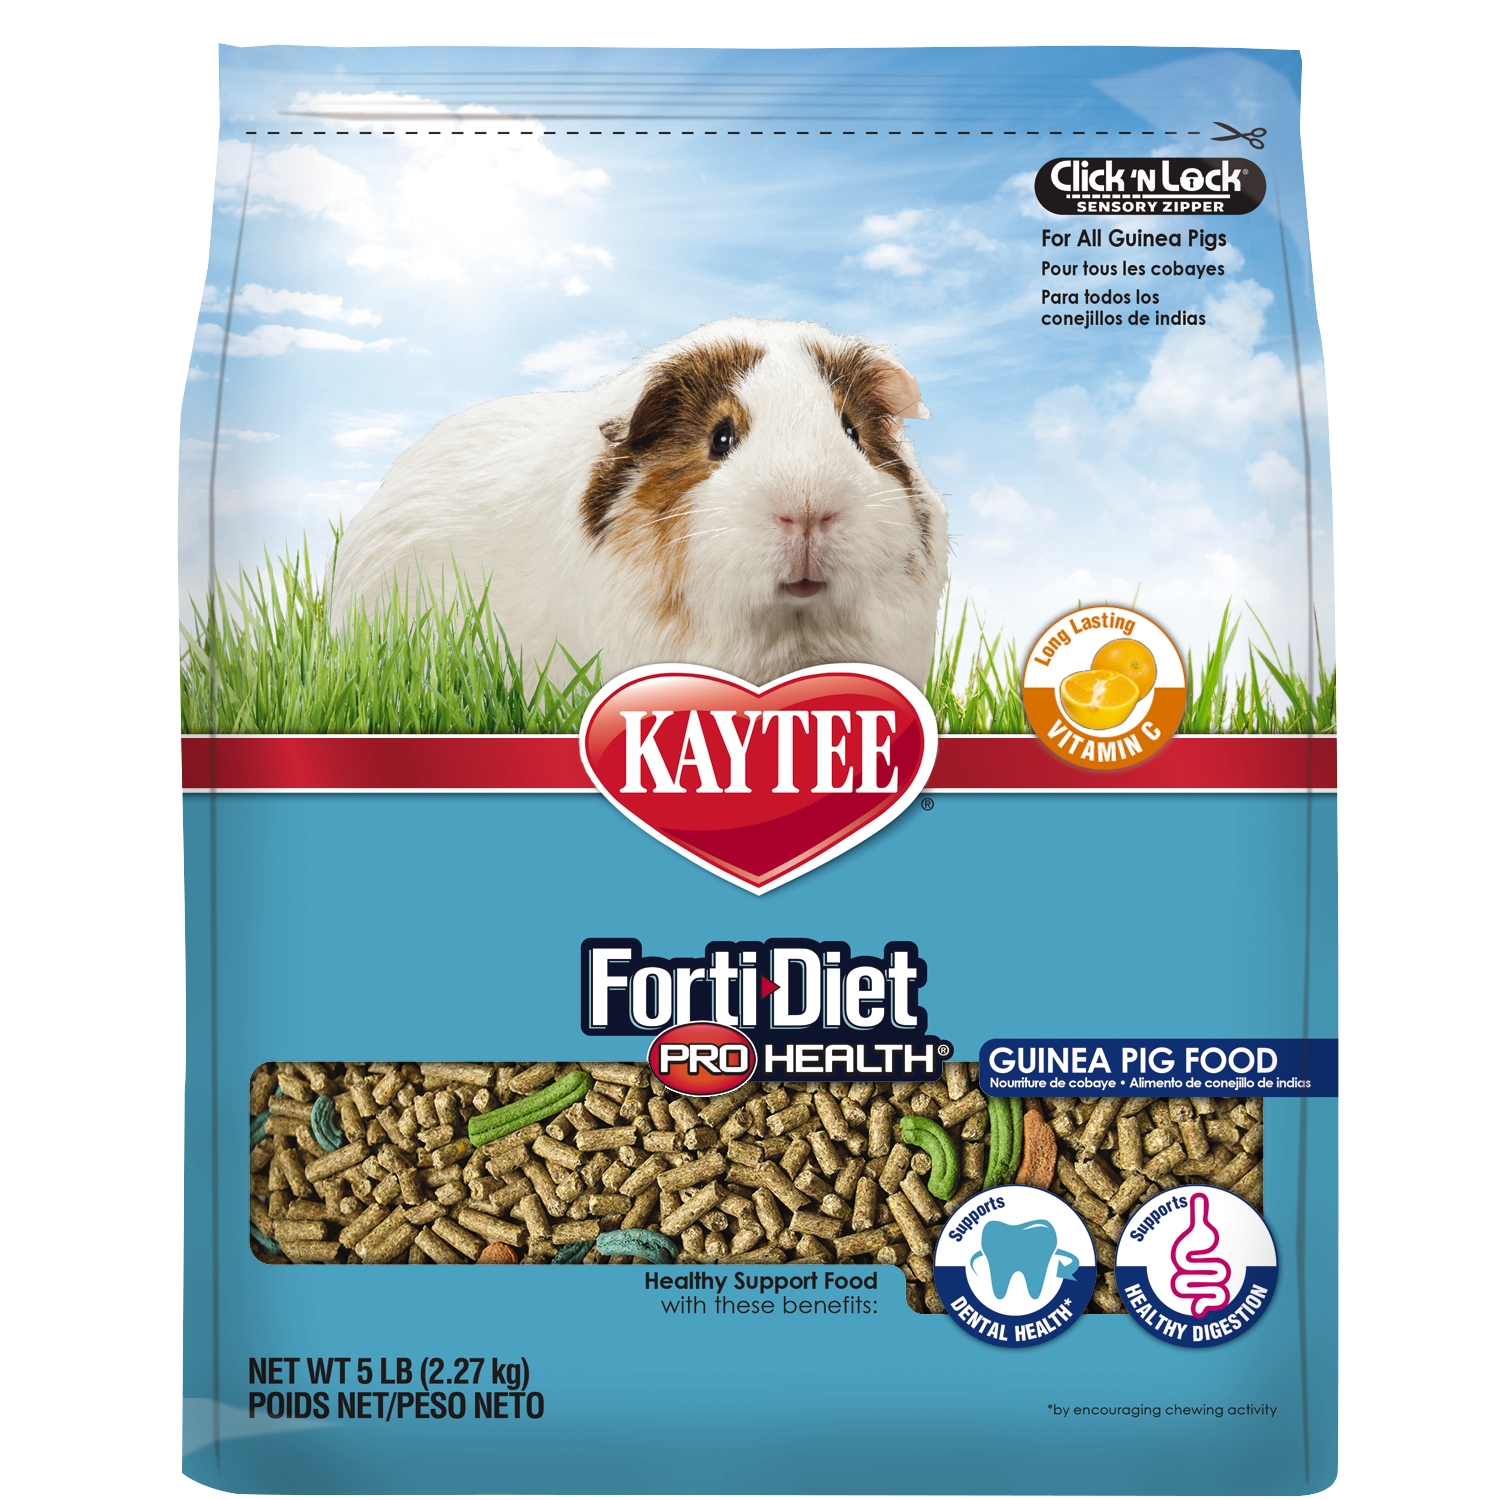 Kaytee Forti-Diet Pro Health Guinea Pig Food 5 lb